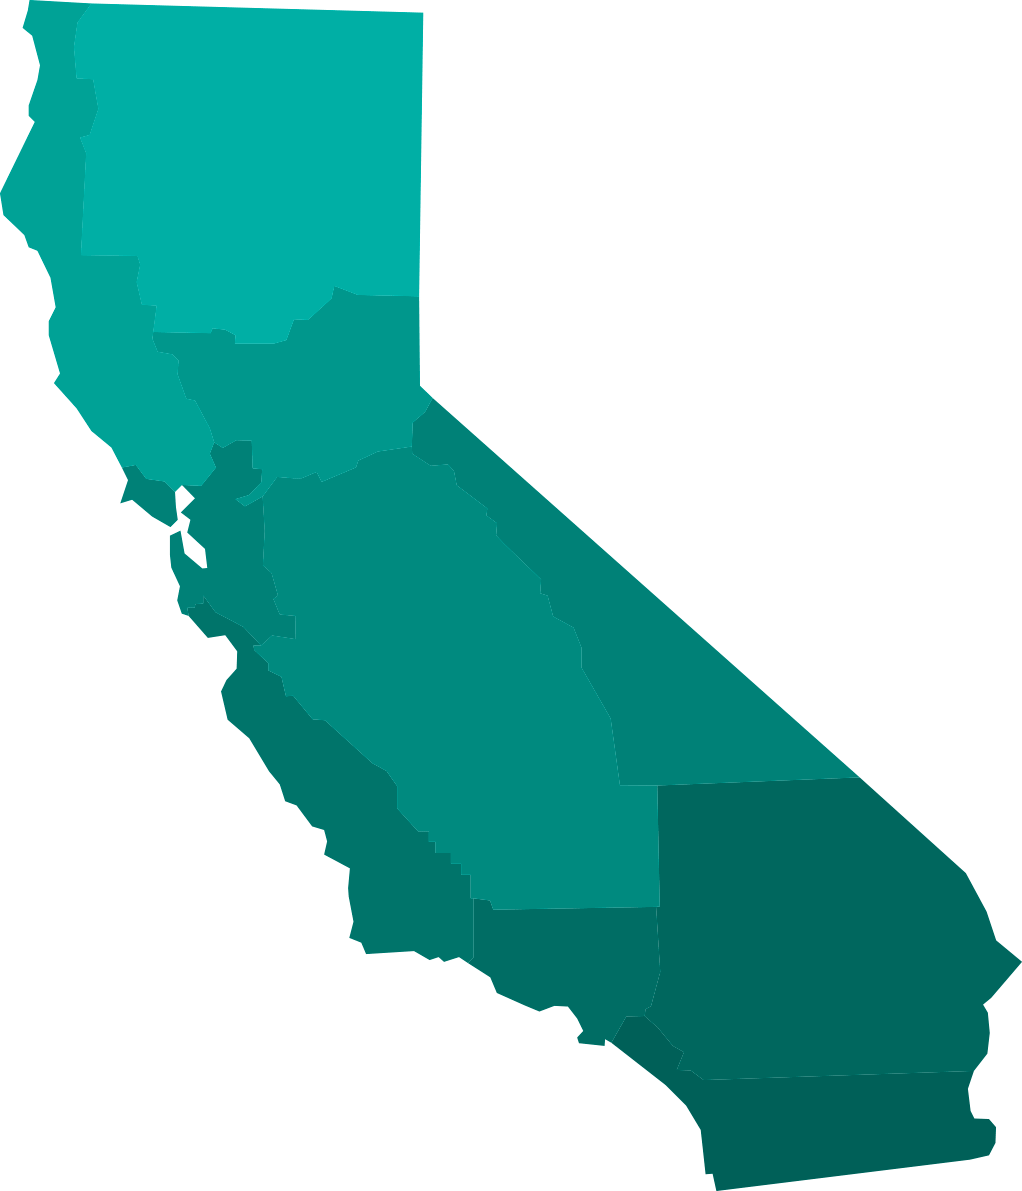 California map showing 10 major regions